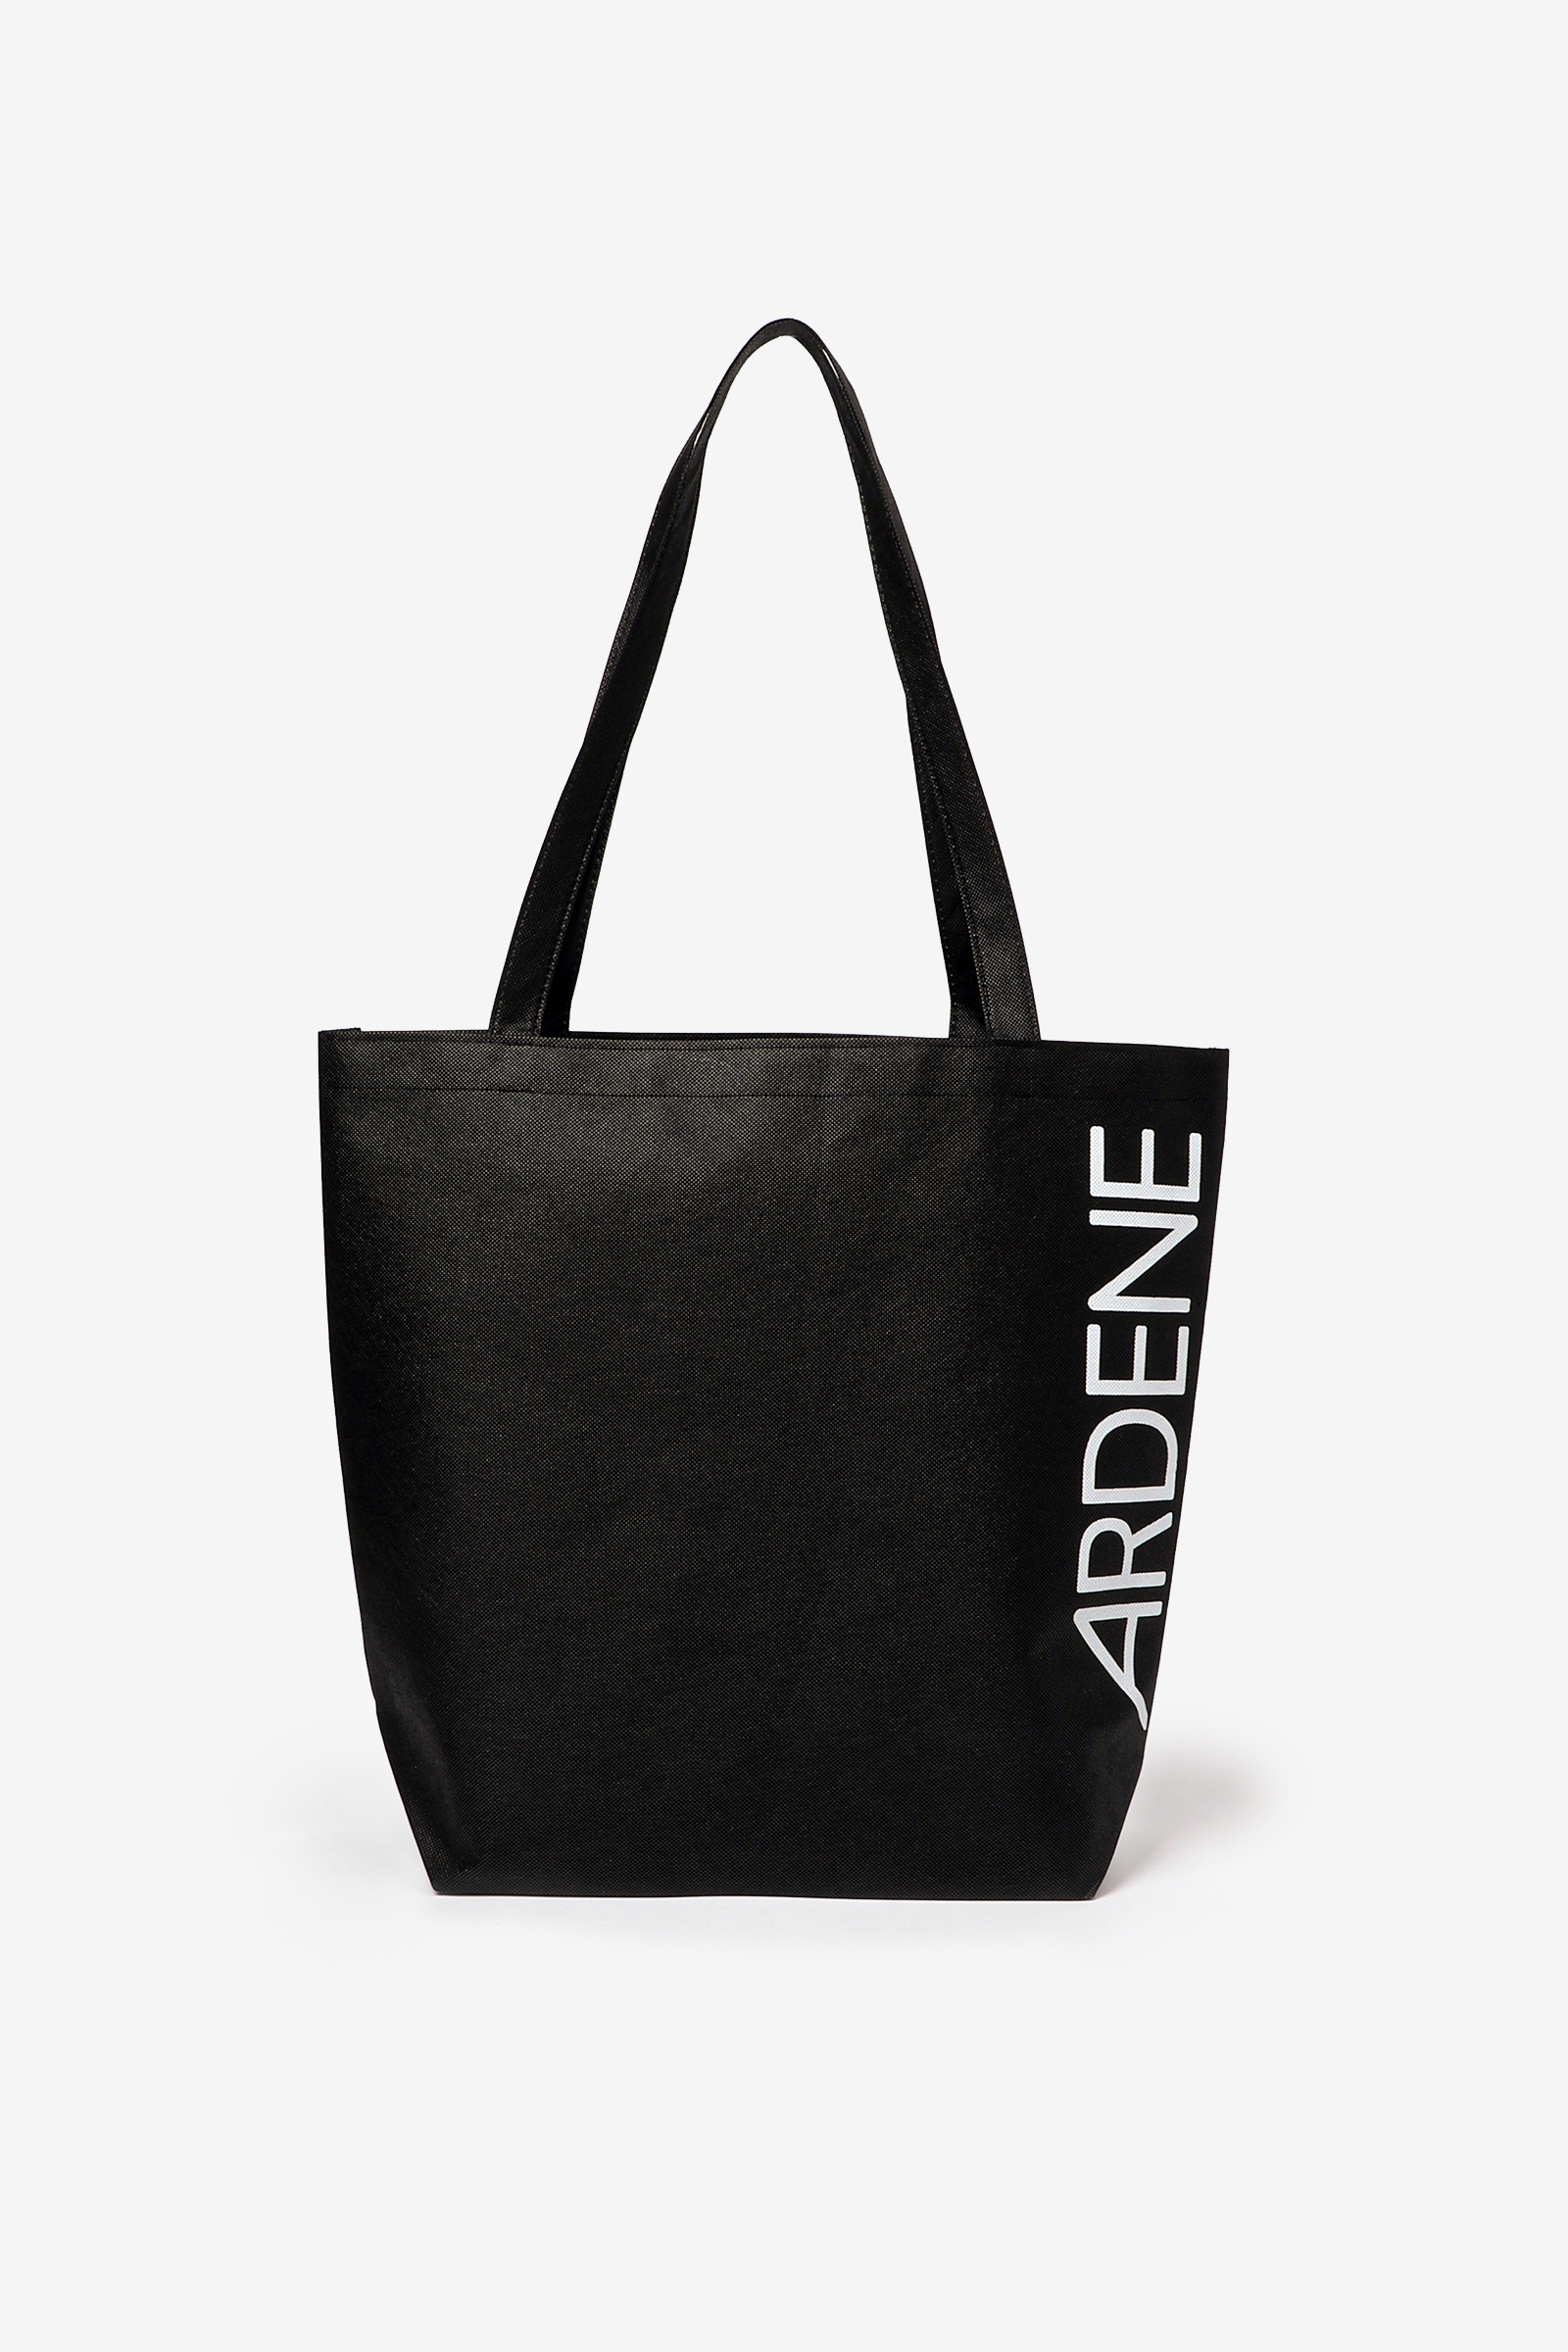 Ardene Medium Reusable Tote Bag in Black